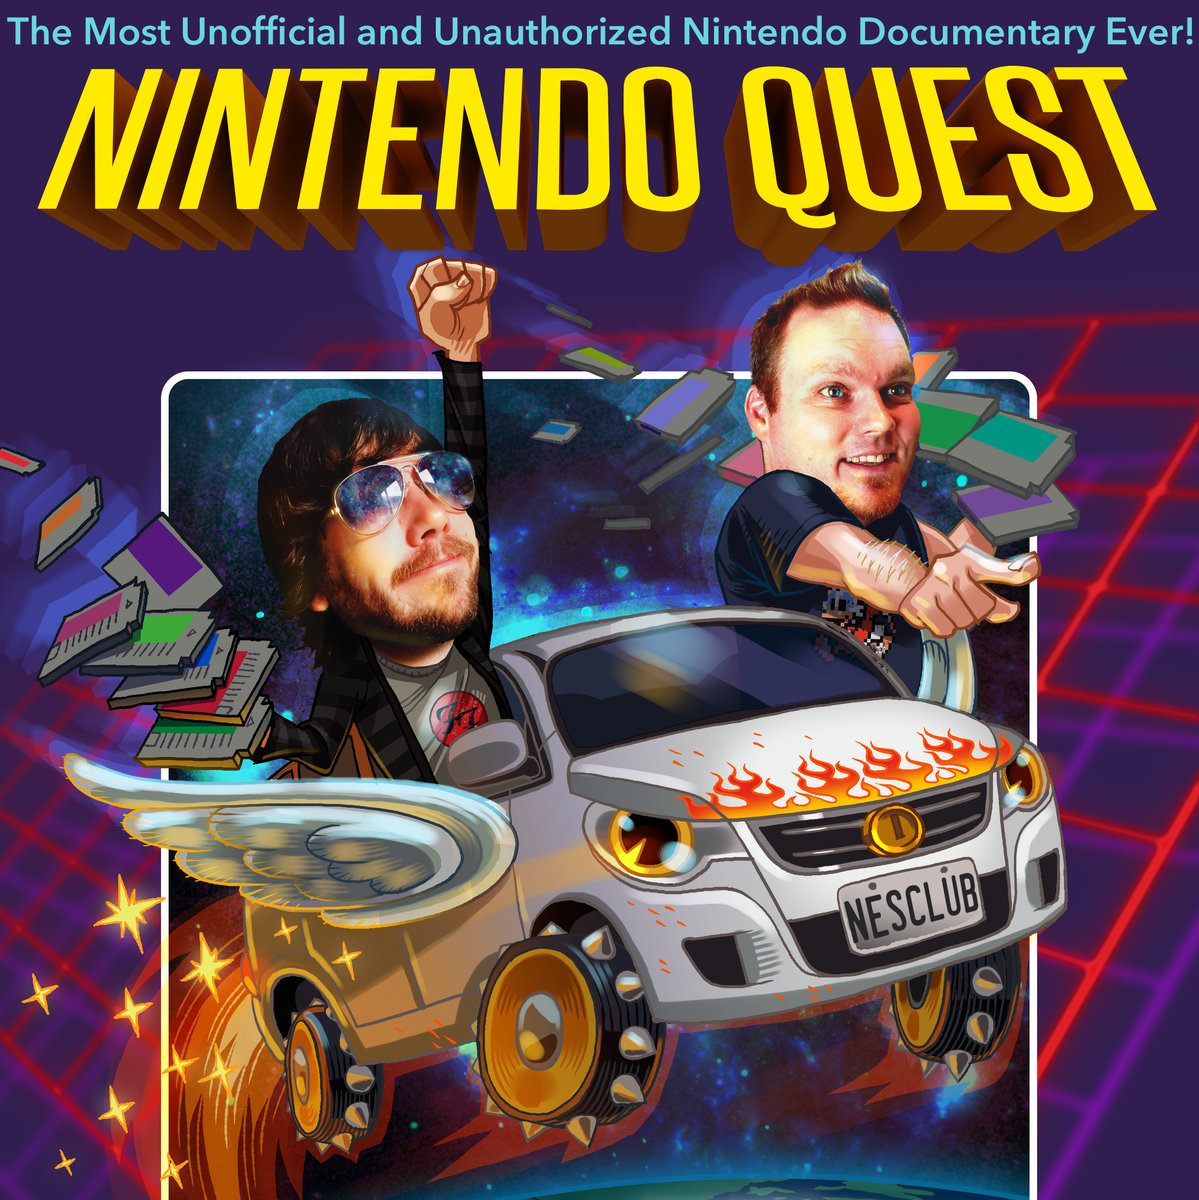 Nintendo quest